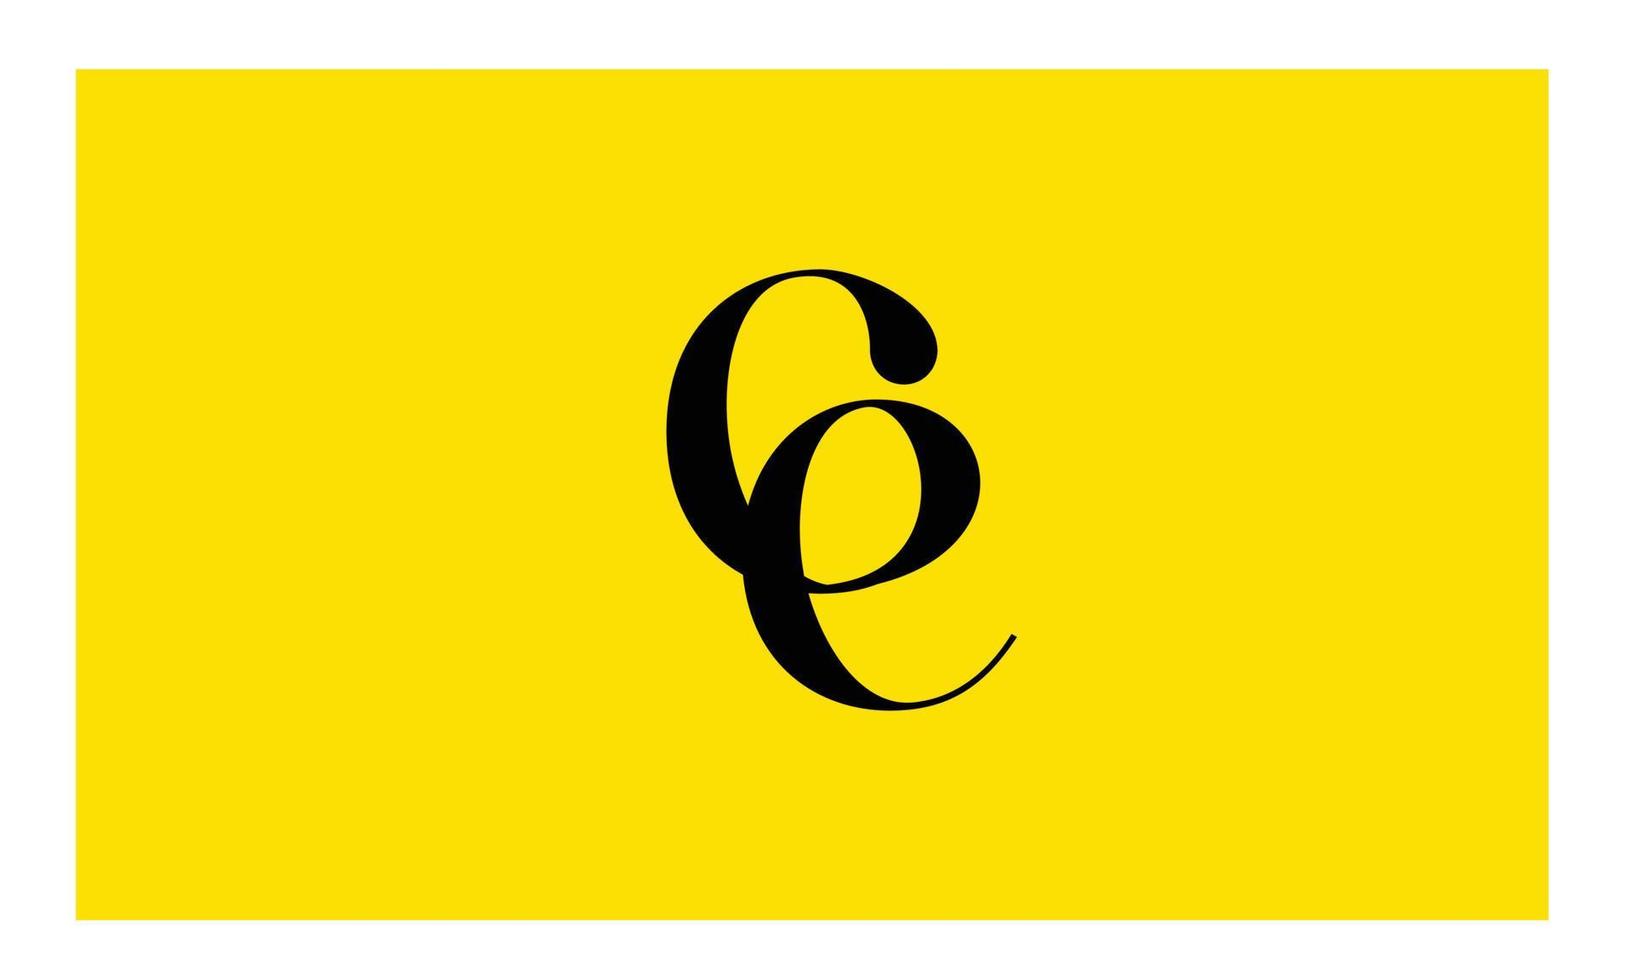 Alphabet letters Initials Monogram logo CE, EC, C and E vector